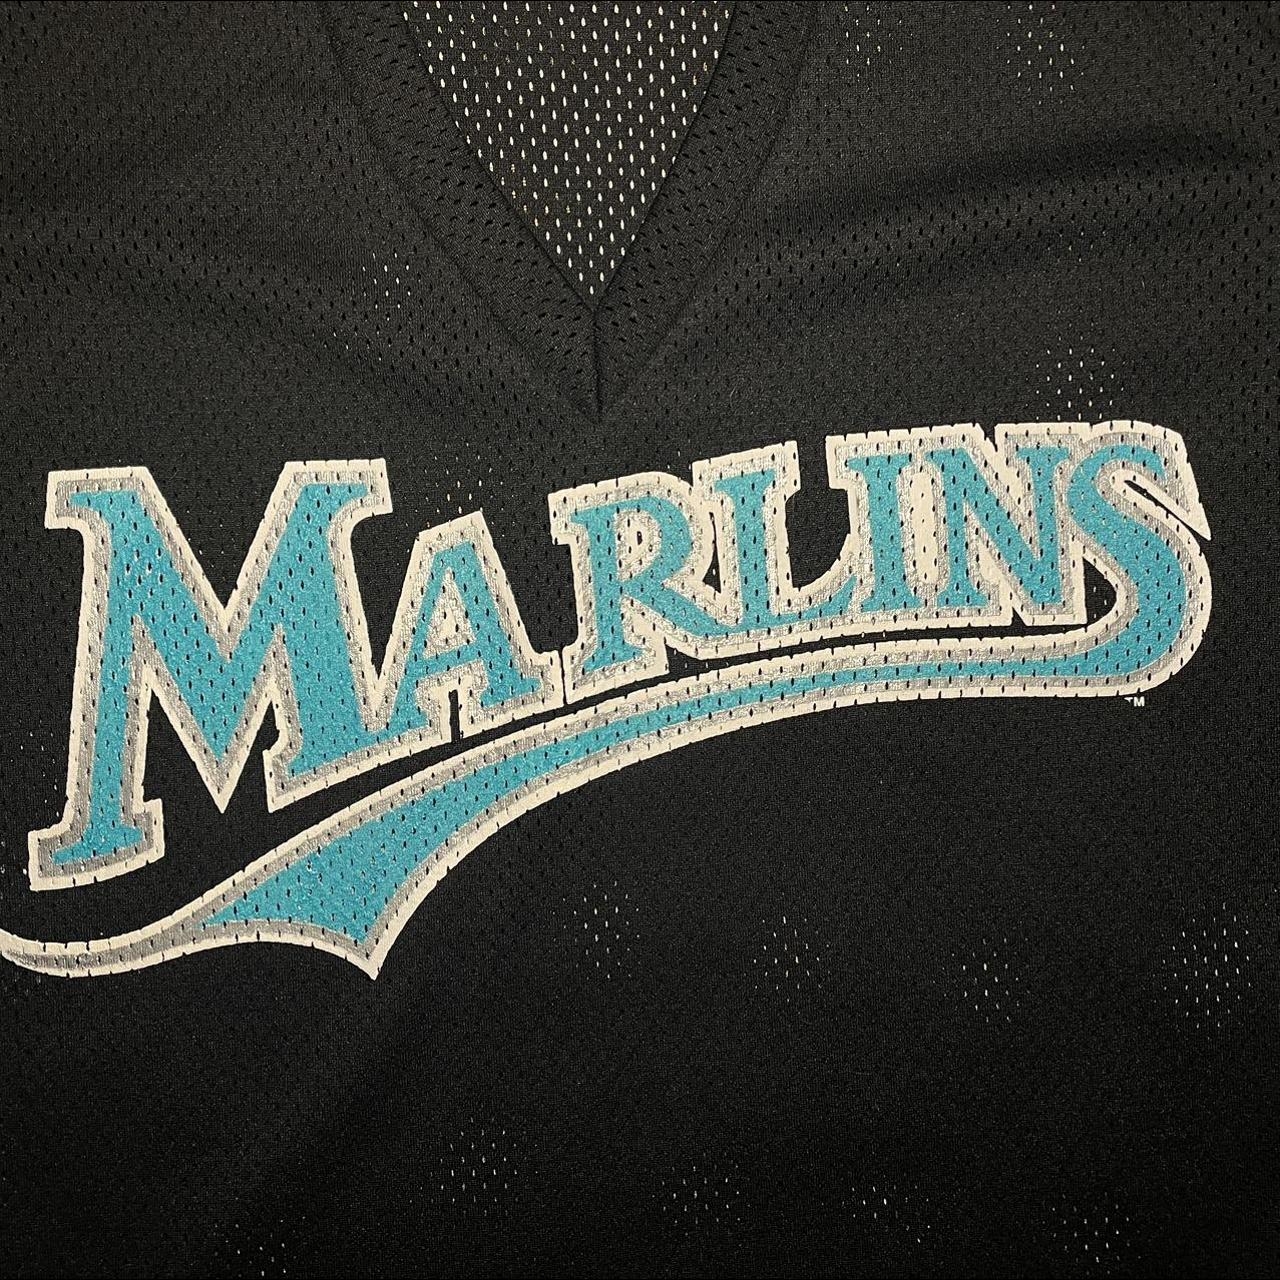 Vintage MAJESTIC Florida Marlins 1997 World Series Jersey